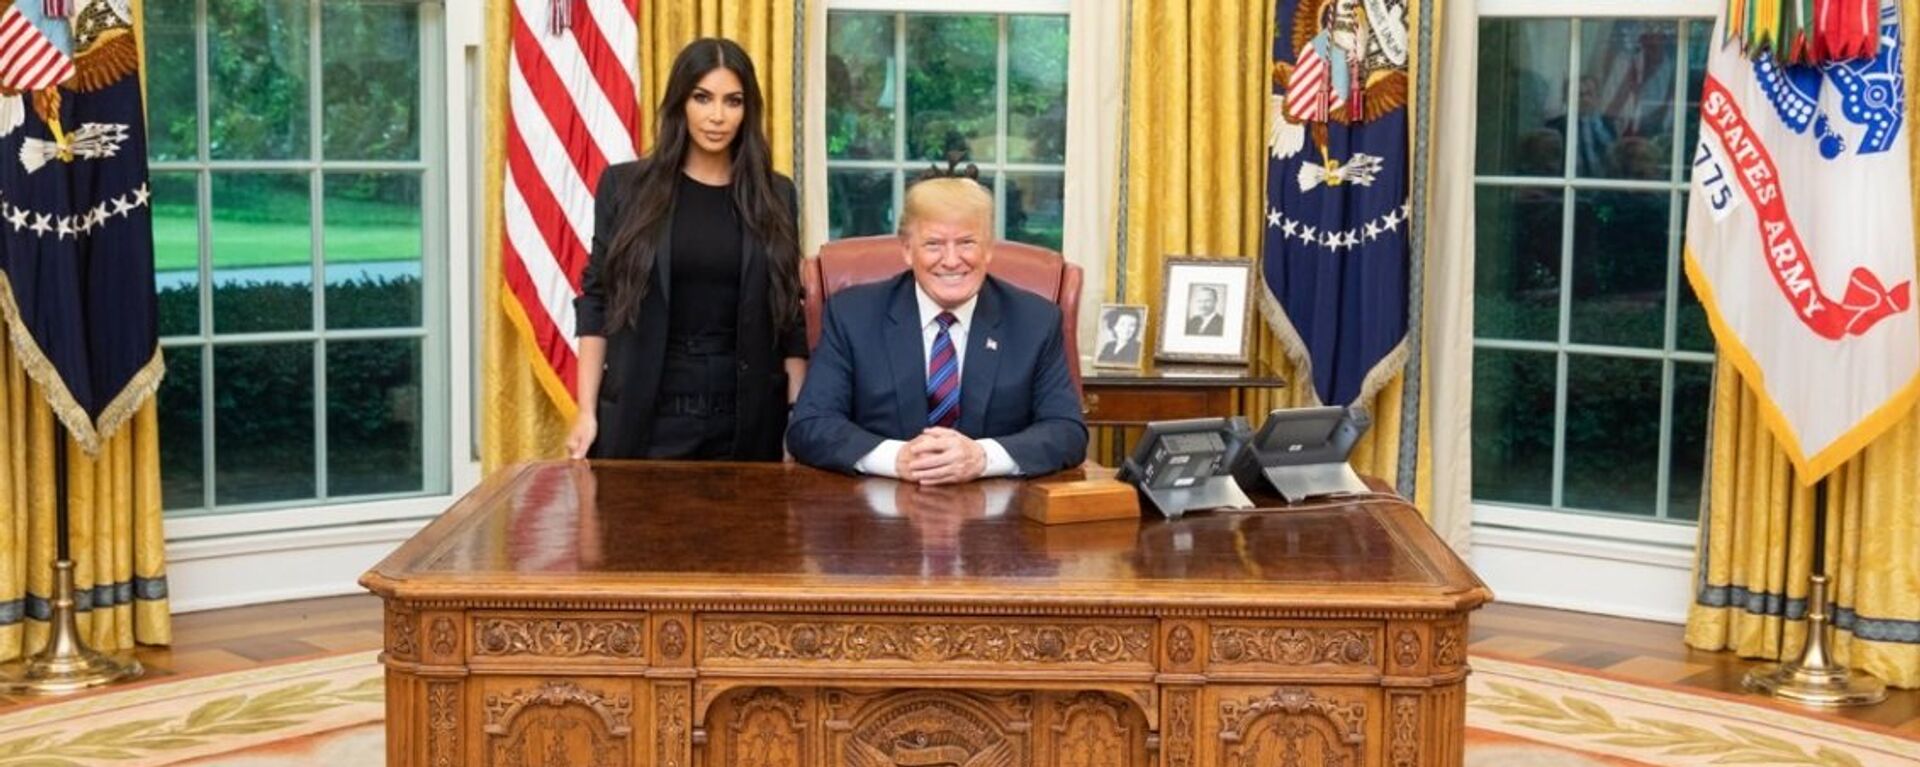 The US President Donald Trump meeting Kim Kardashian in the White House - Sputnik International, 1920, 09.12.2020